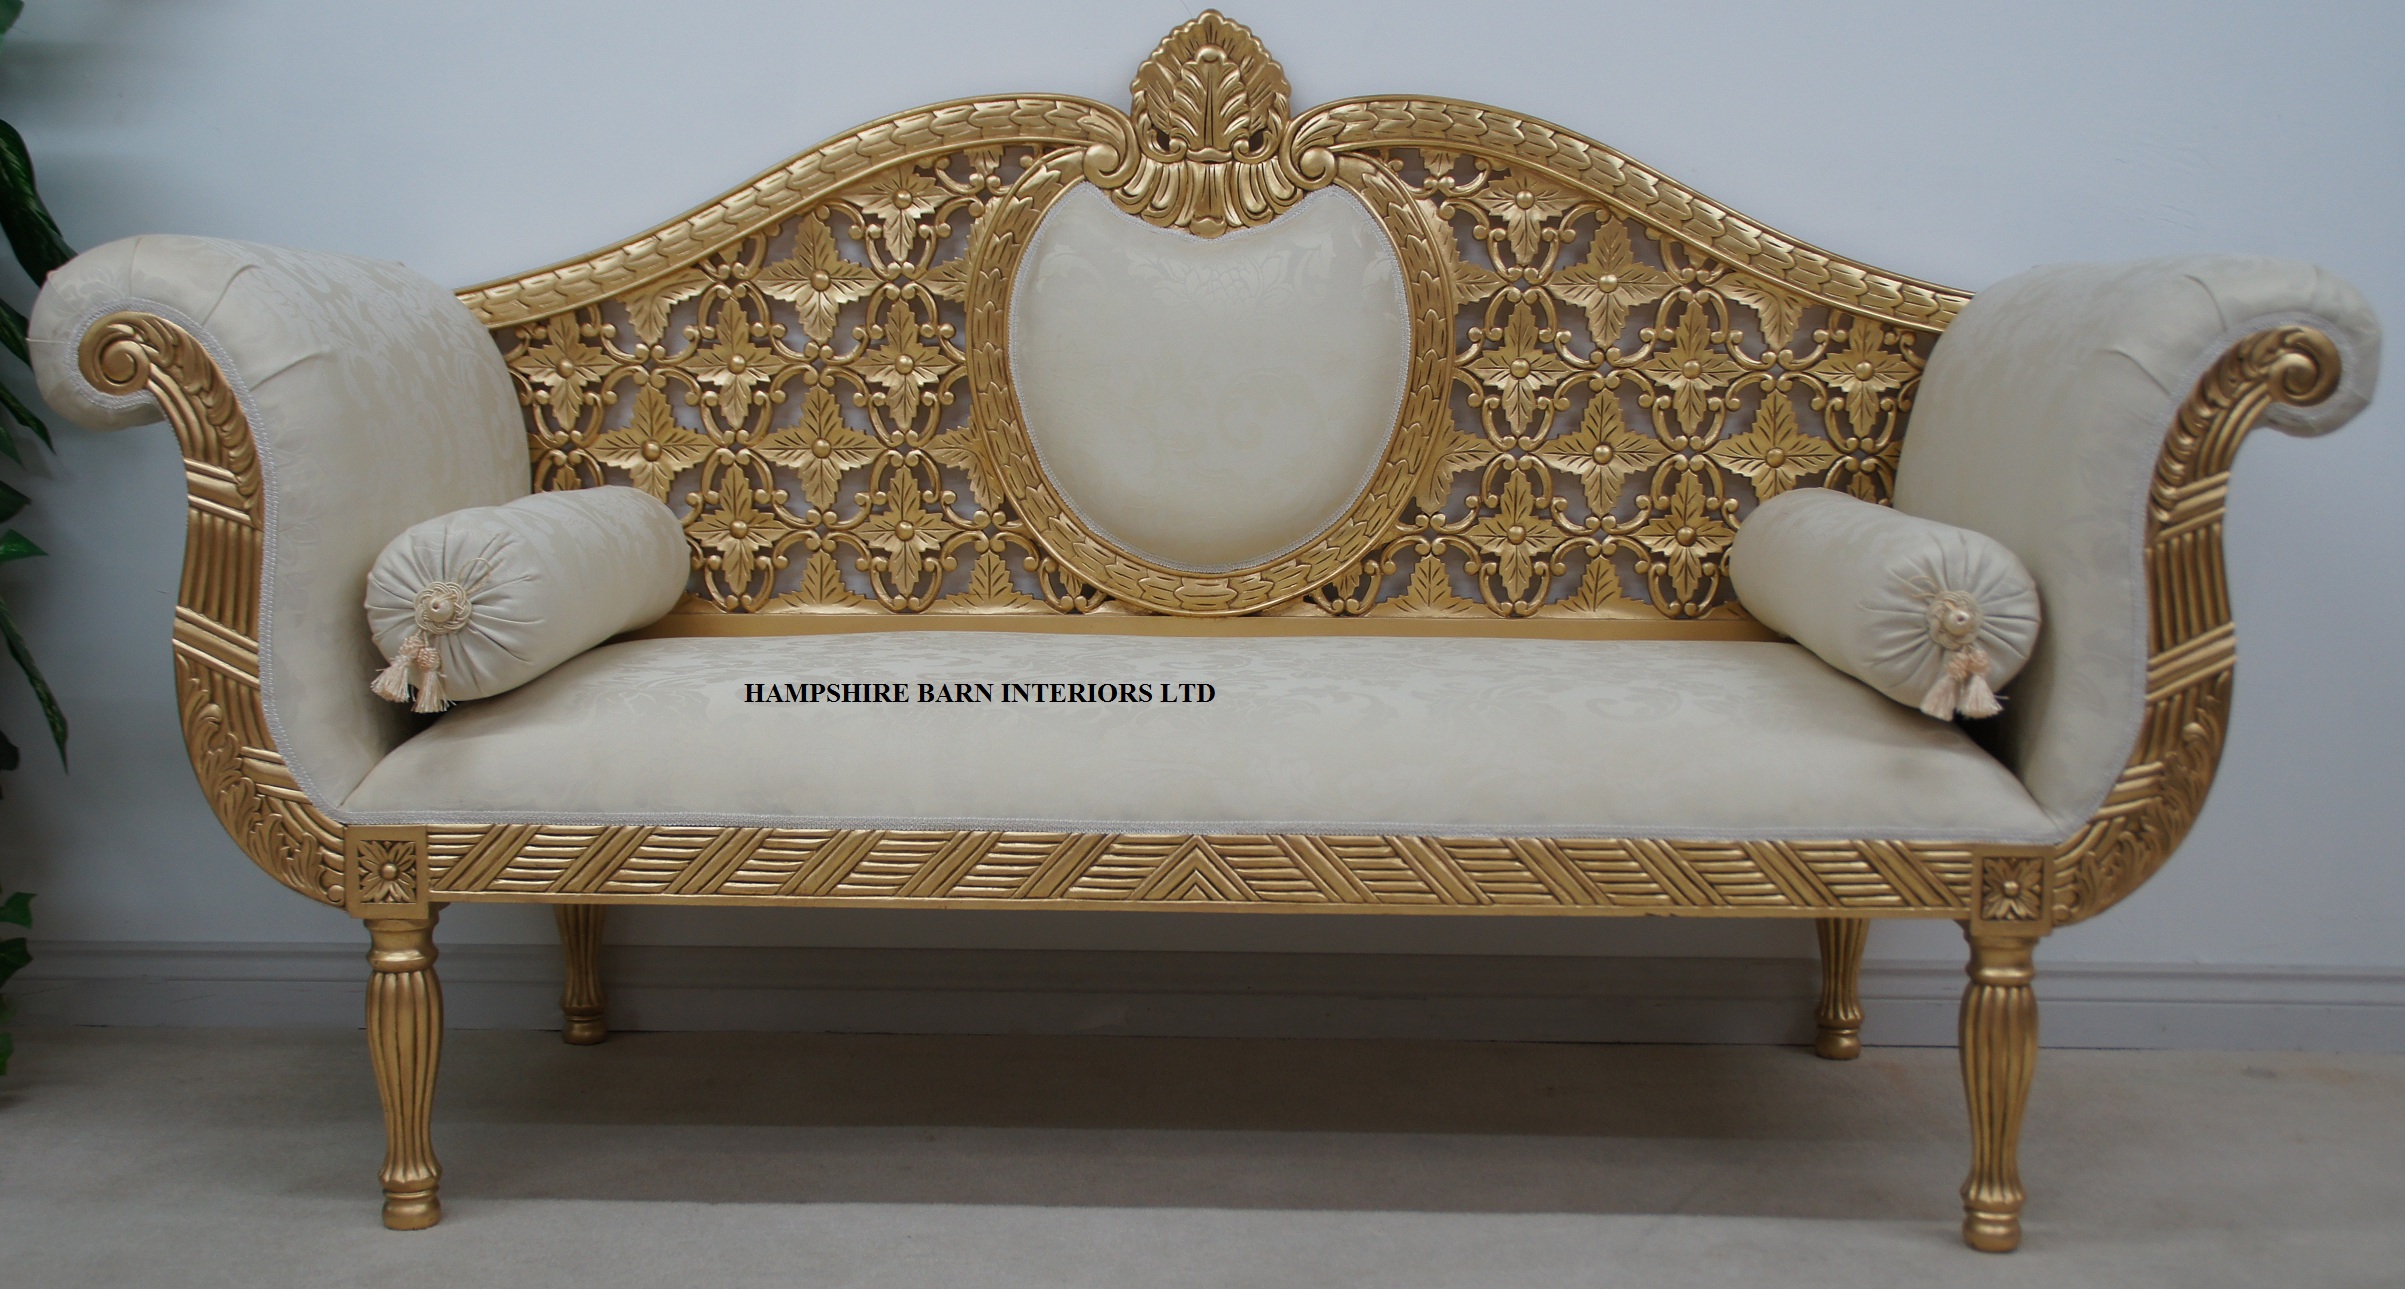 princess sofa chair